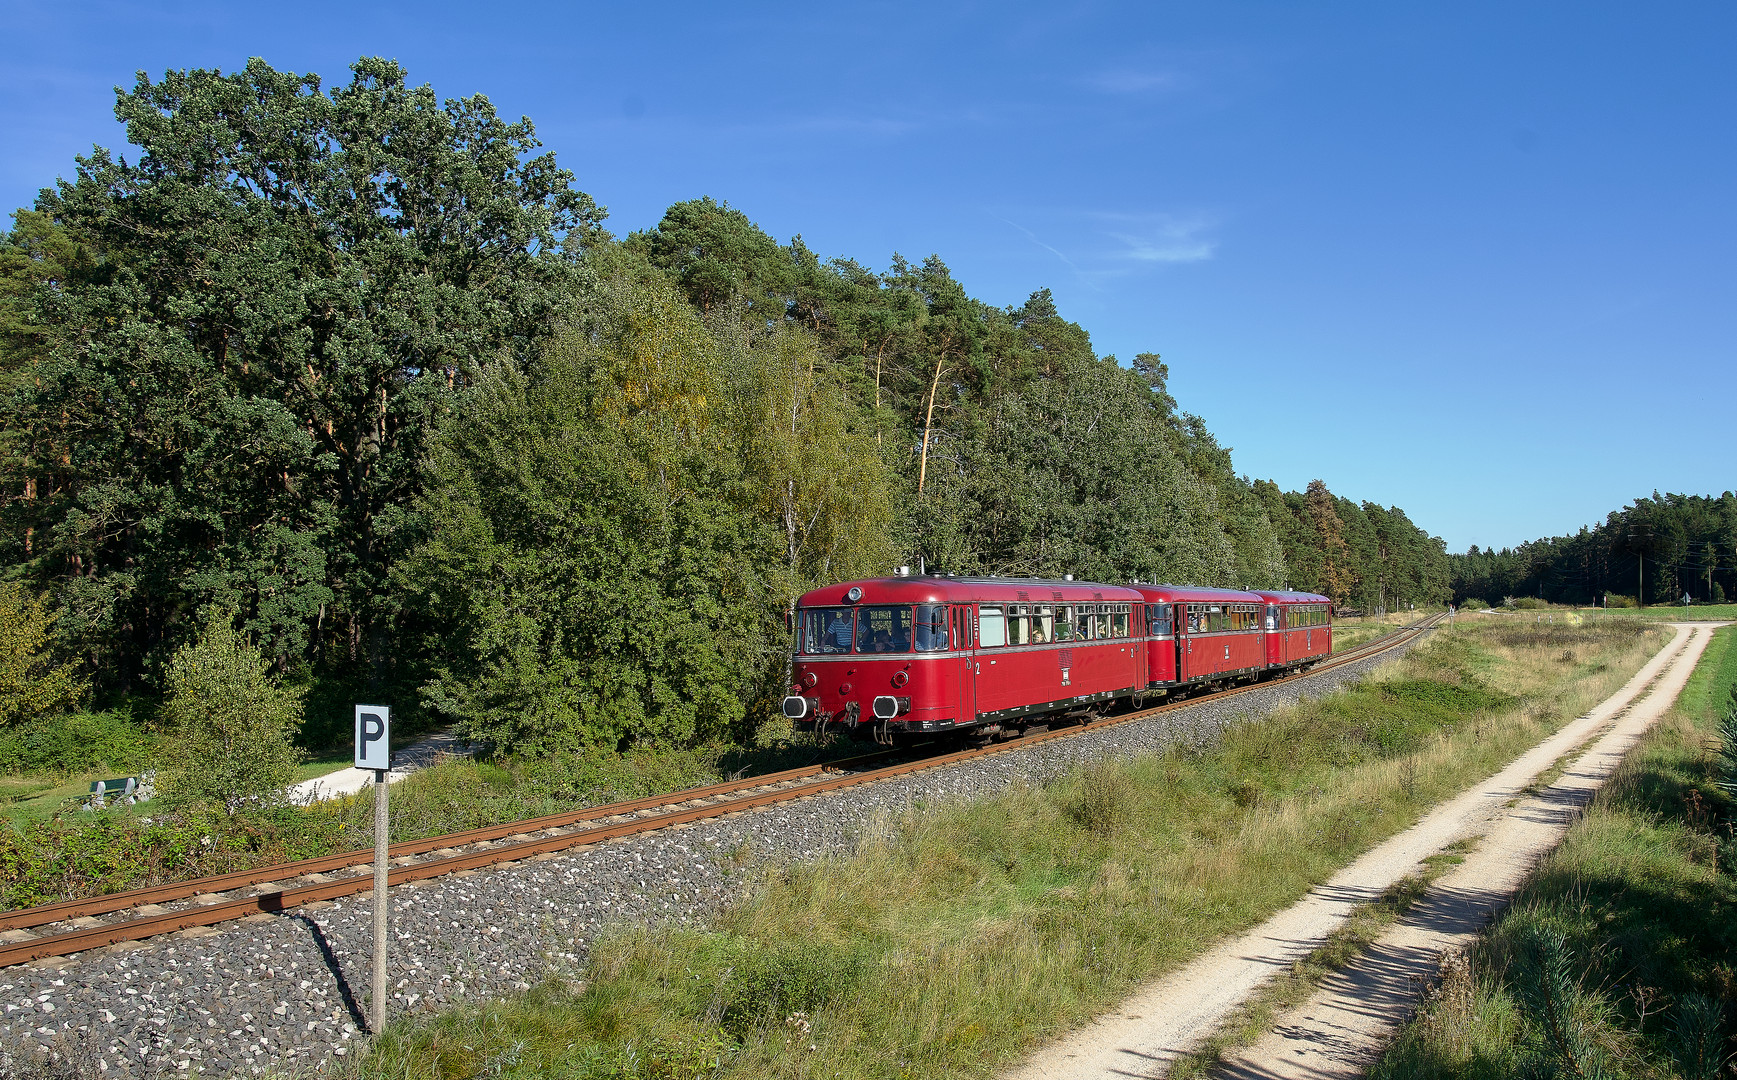 125 Jahre Lokalbahn Wicklesgreuth-Windsbach VIII